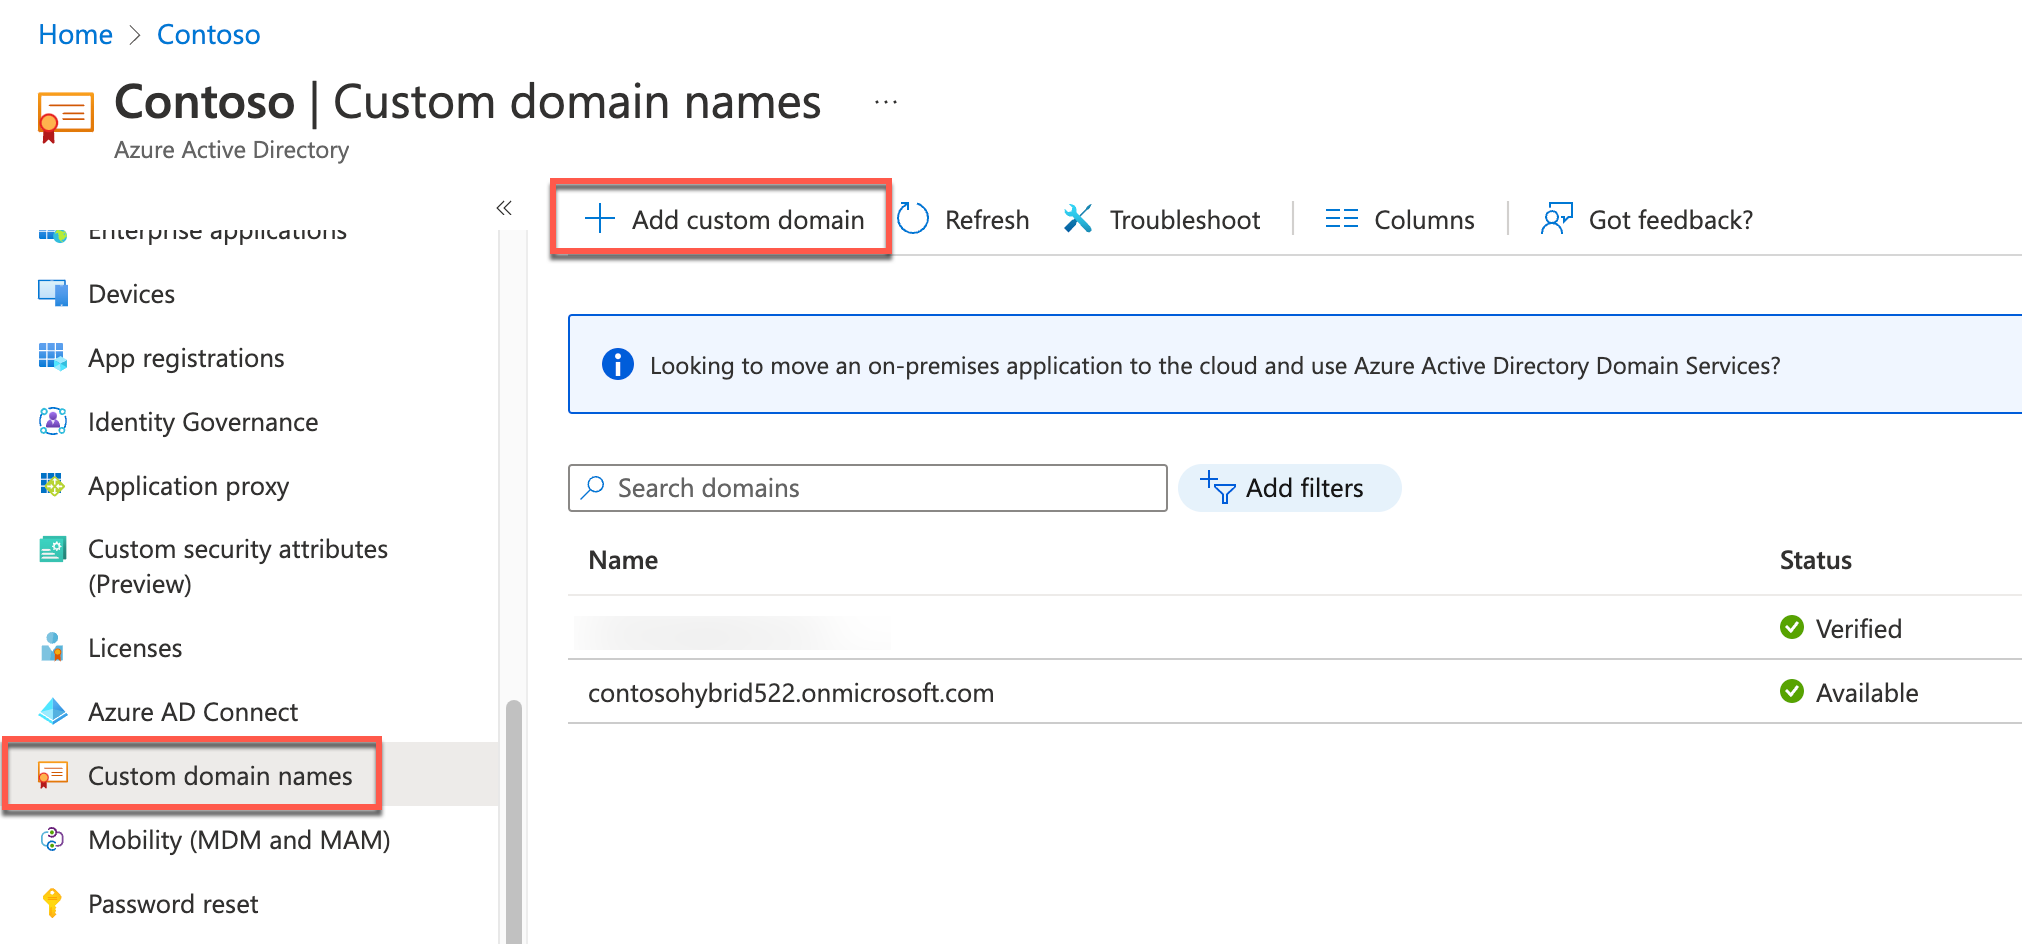 Illustrating selecting custom domains names and add custom domain.